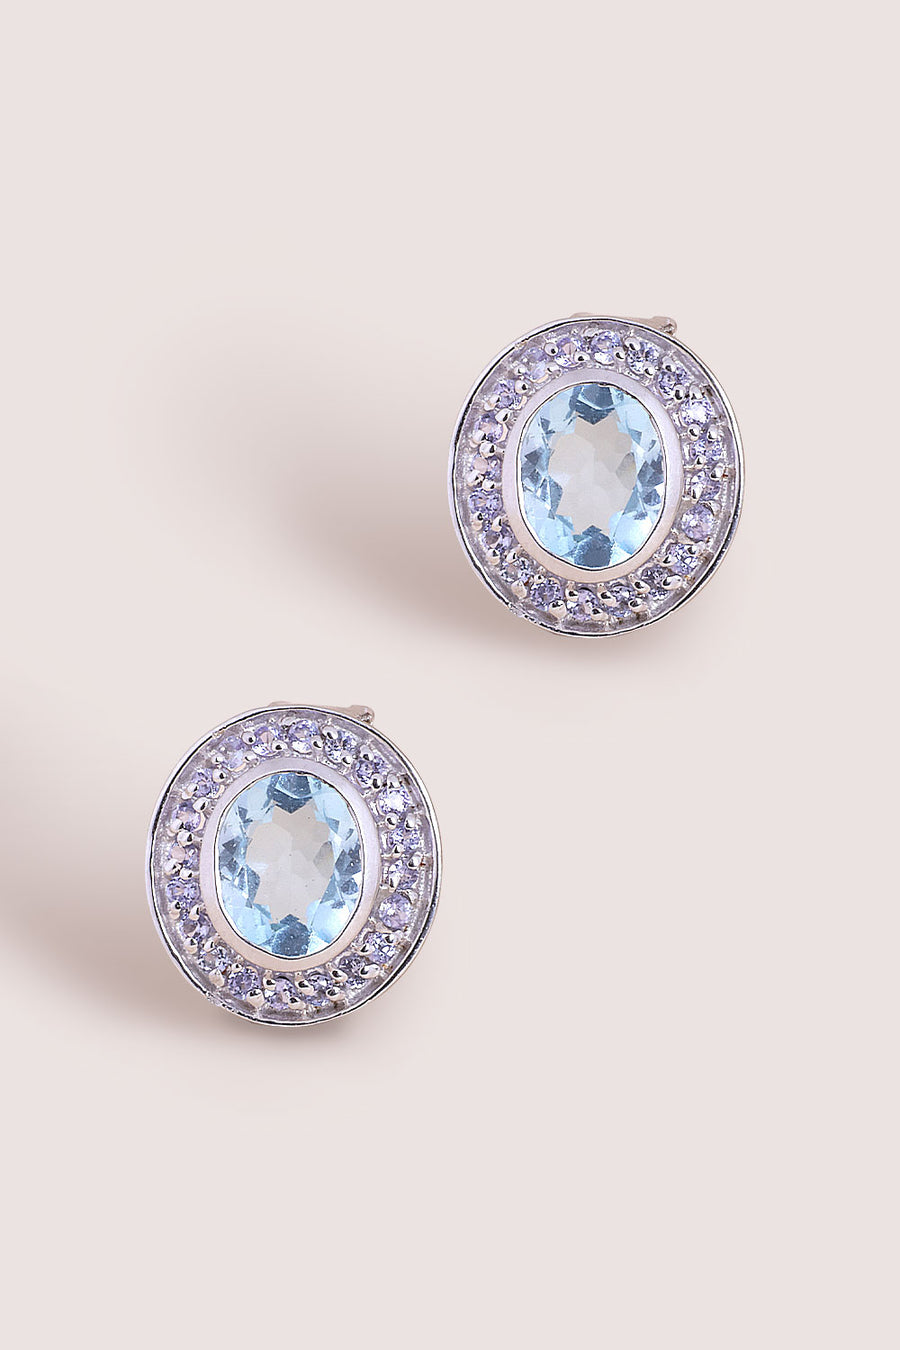 Blue Topaz Tanzanite Sterling Silver Stud Earring - Avishya